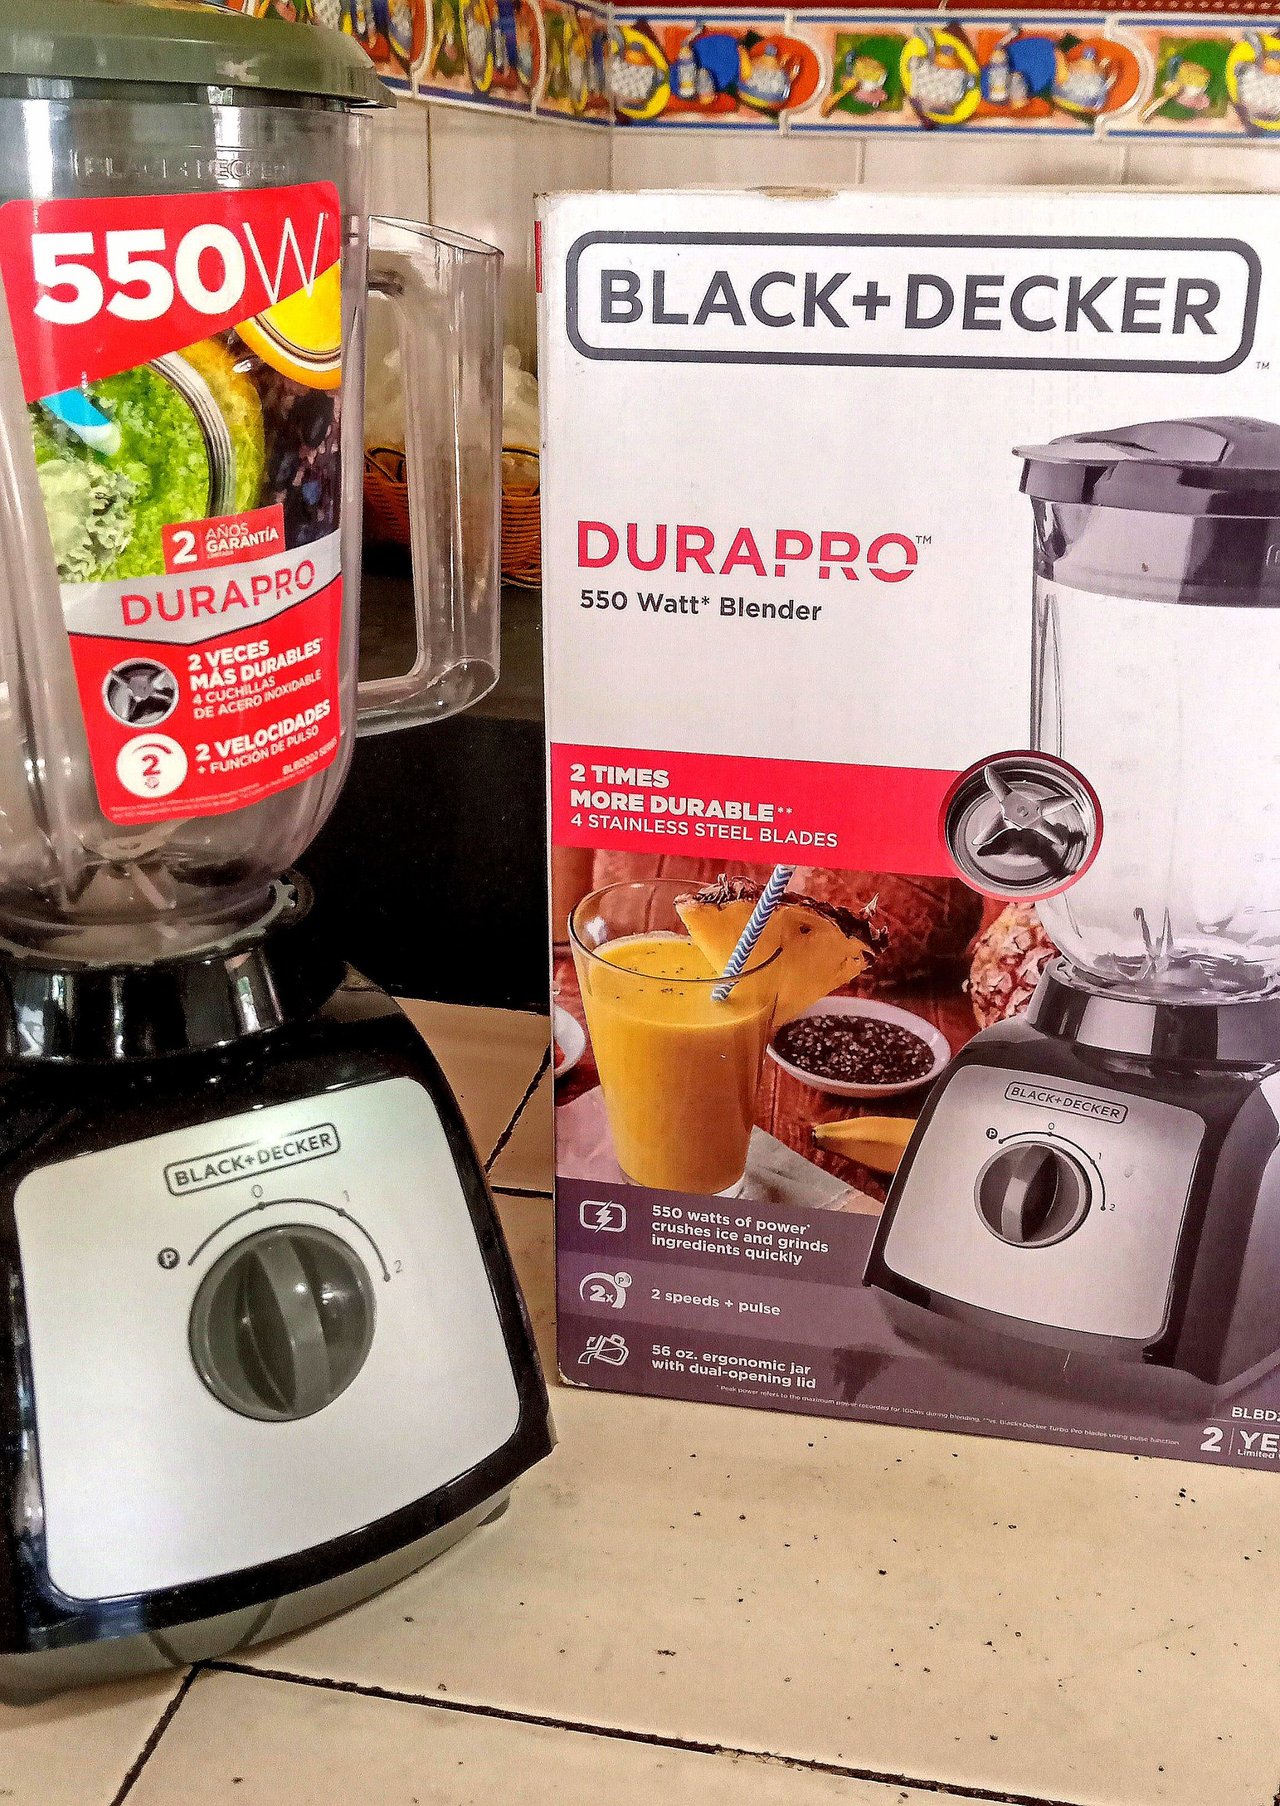 New* Black& Decker DURAPRO 550 Watt* Blender for Sale in New York